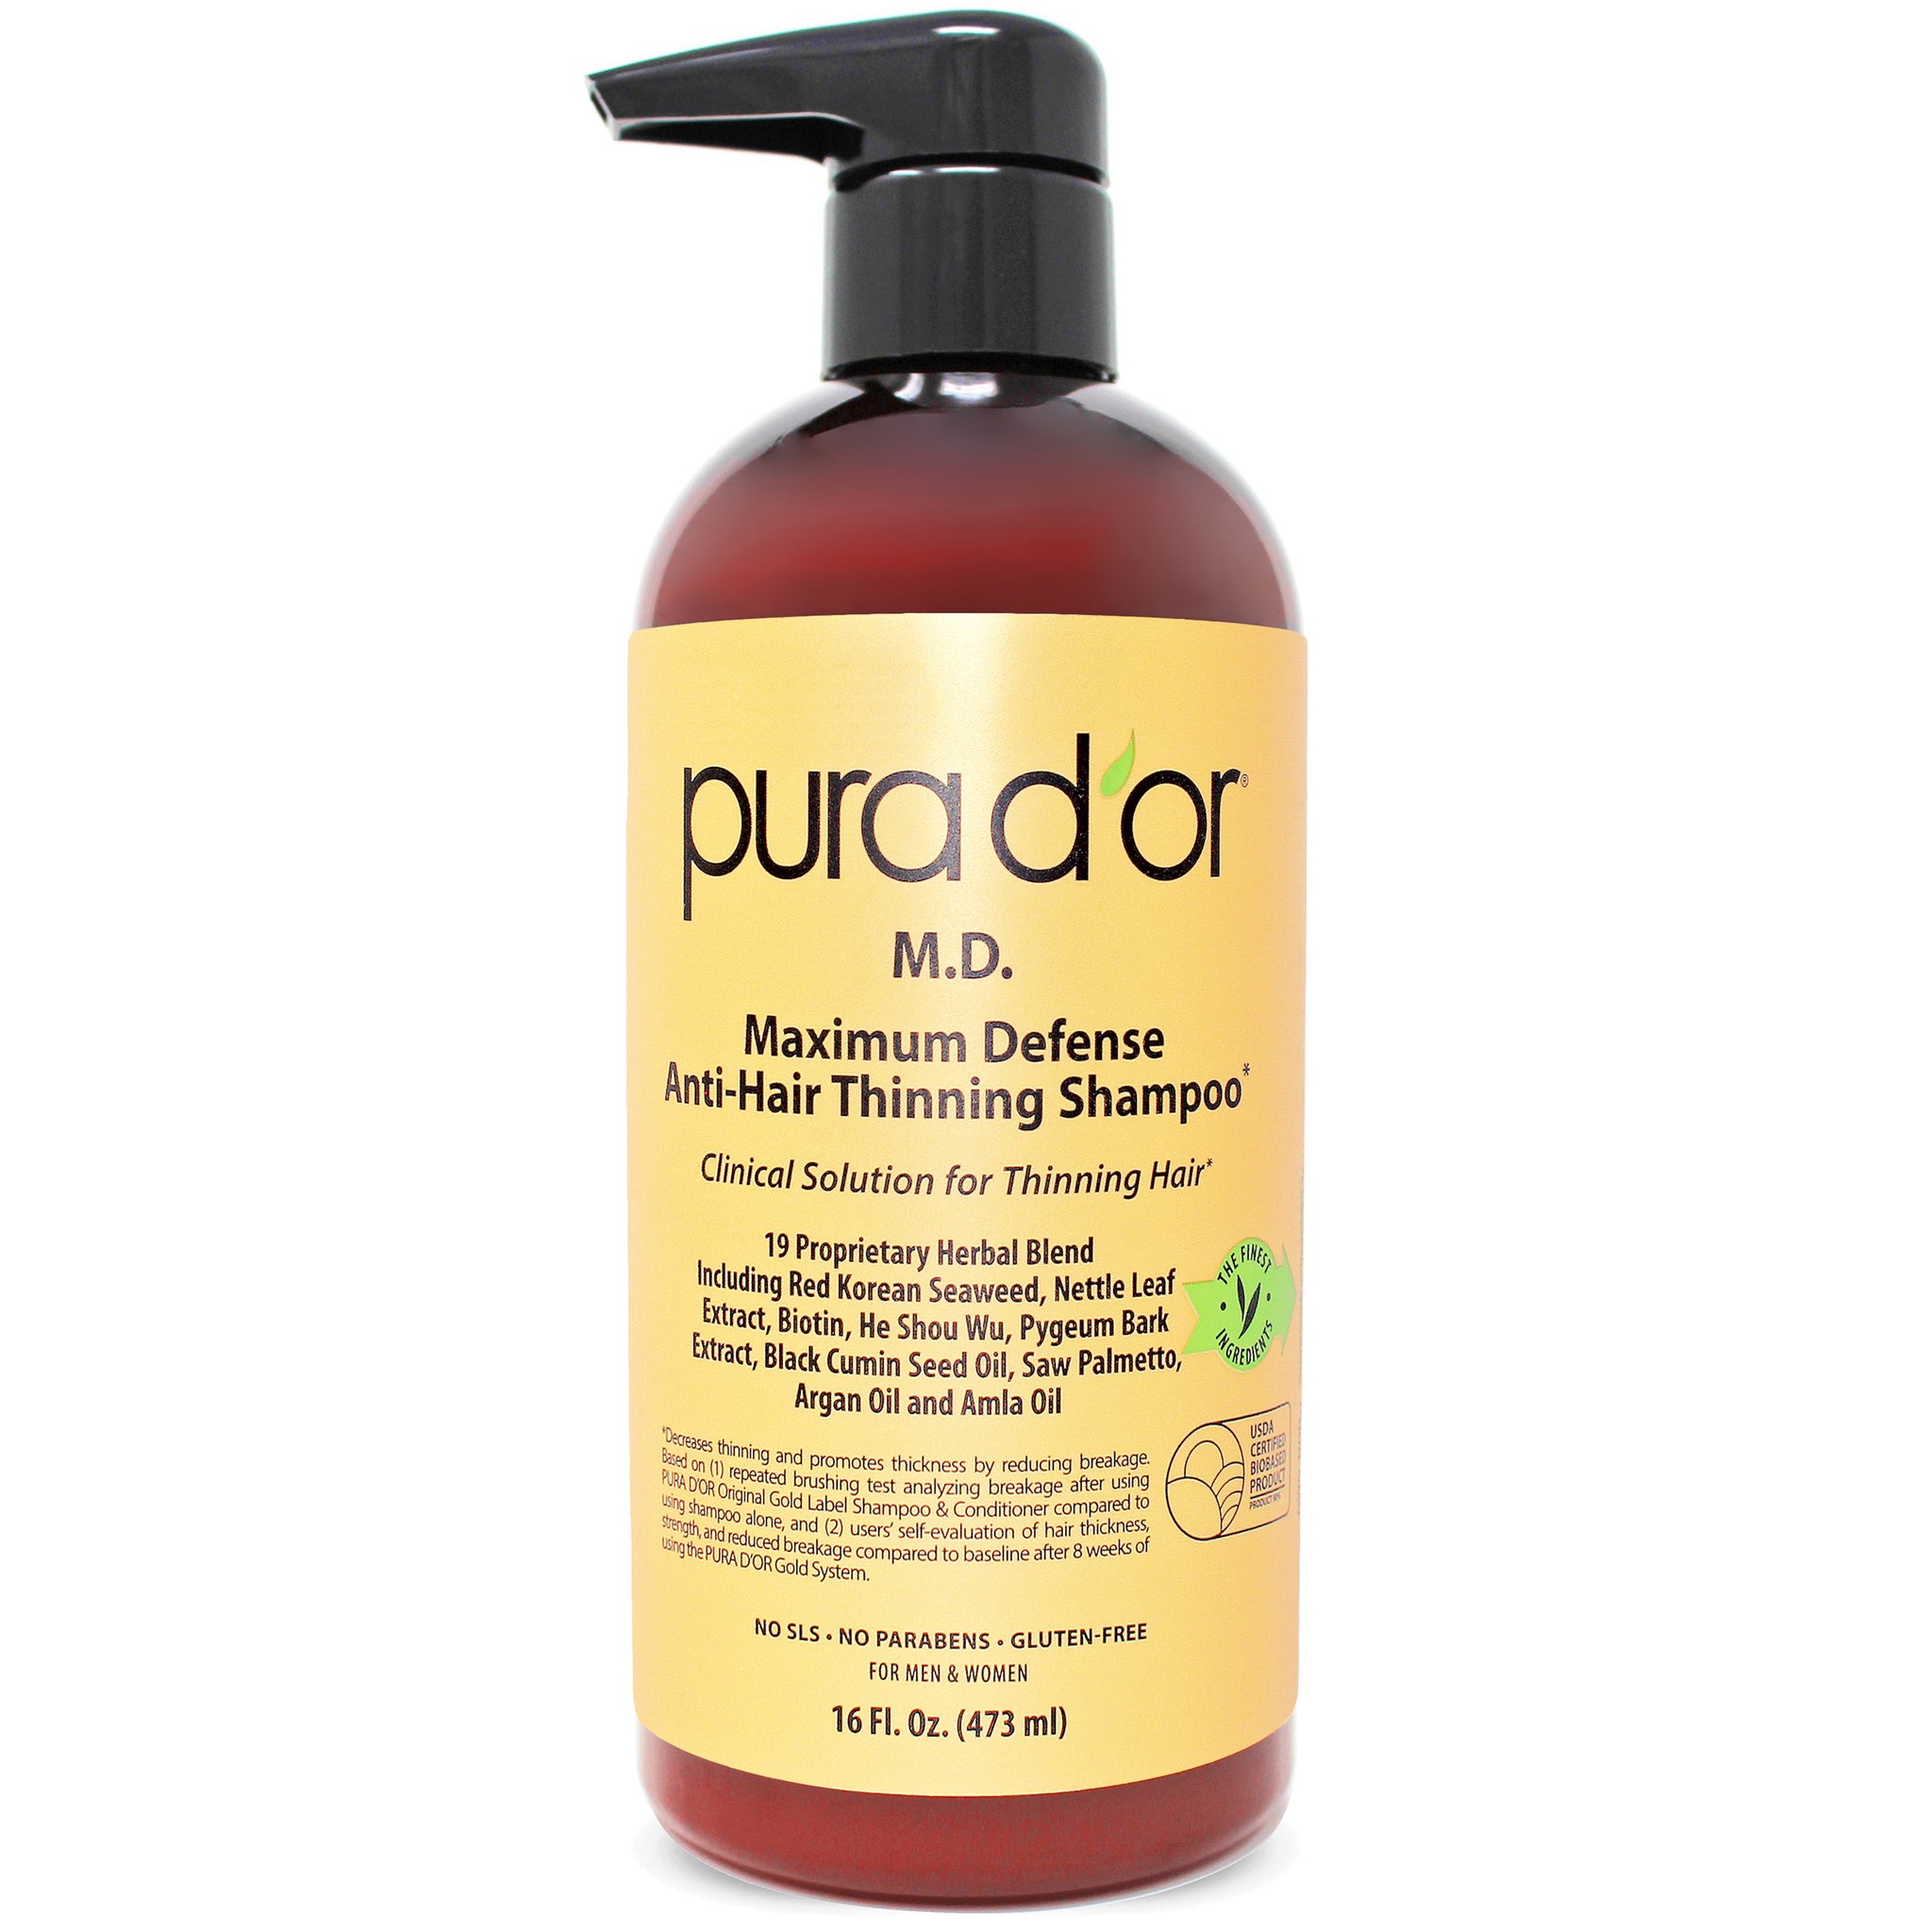 Pura d’or M.D. Maximum Defense Anti-Hair Thinning Shampoo